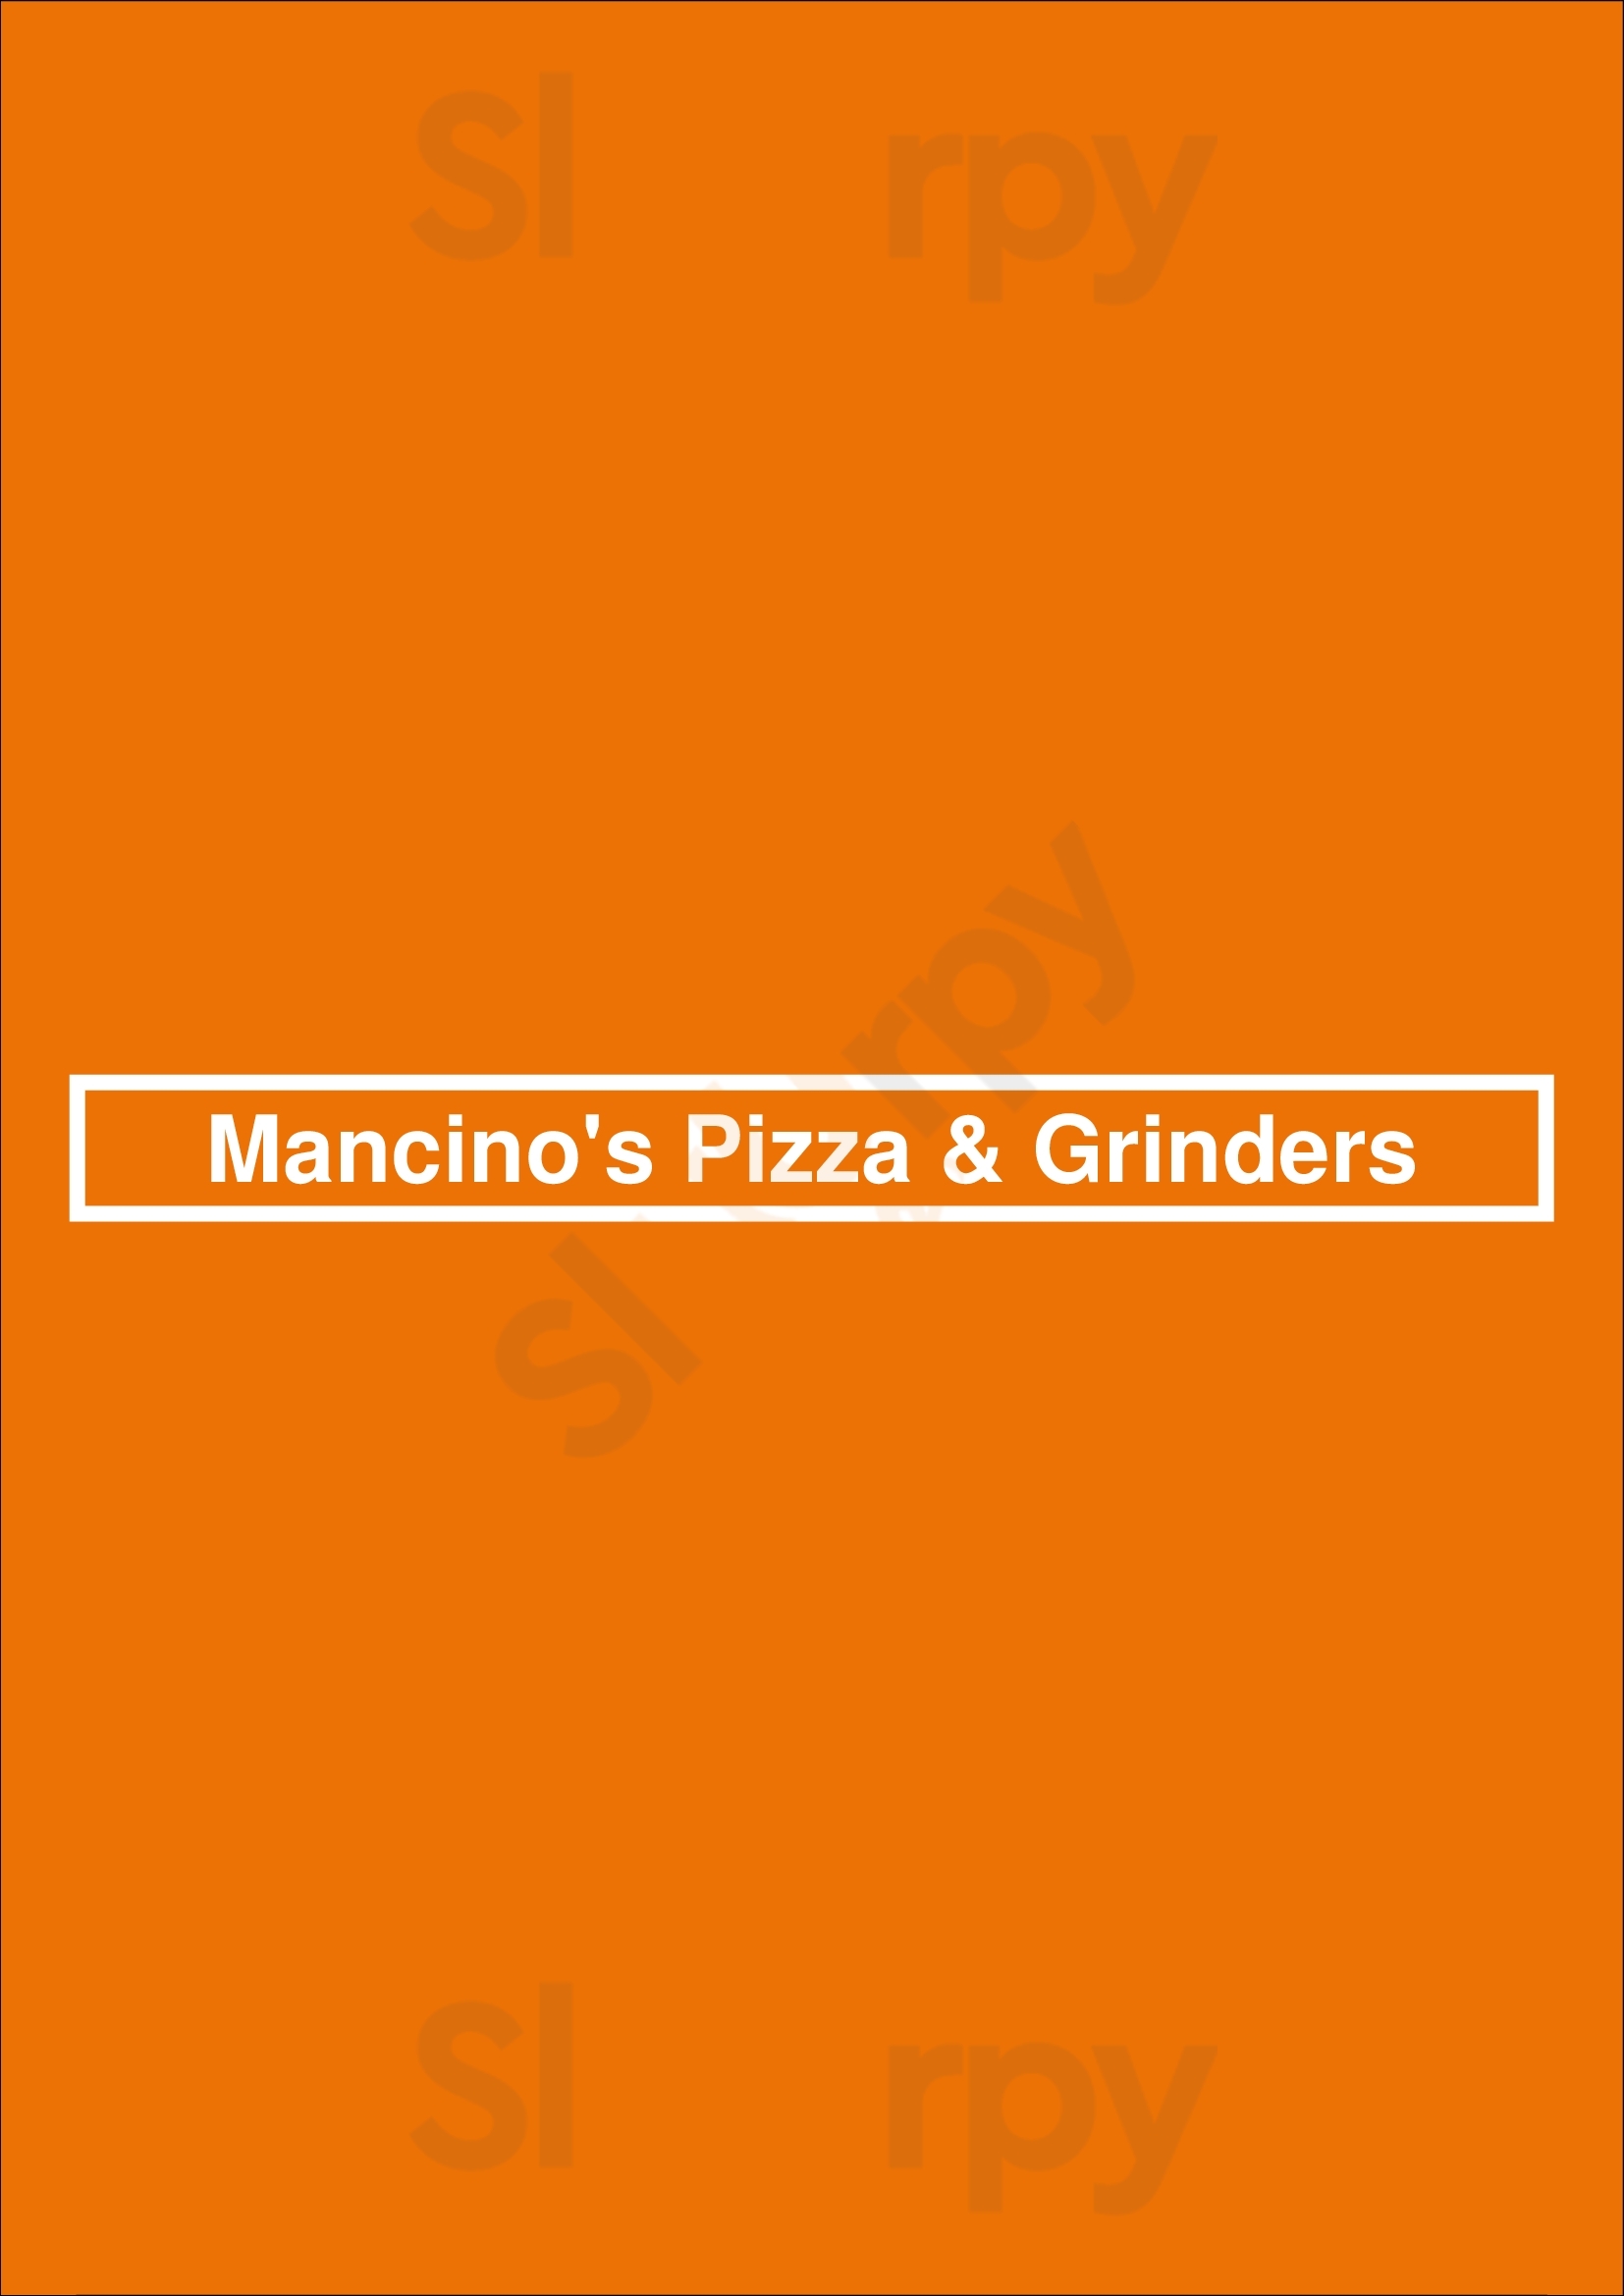 Mancino's Pizza & Grinders Lexington Menu - 1